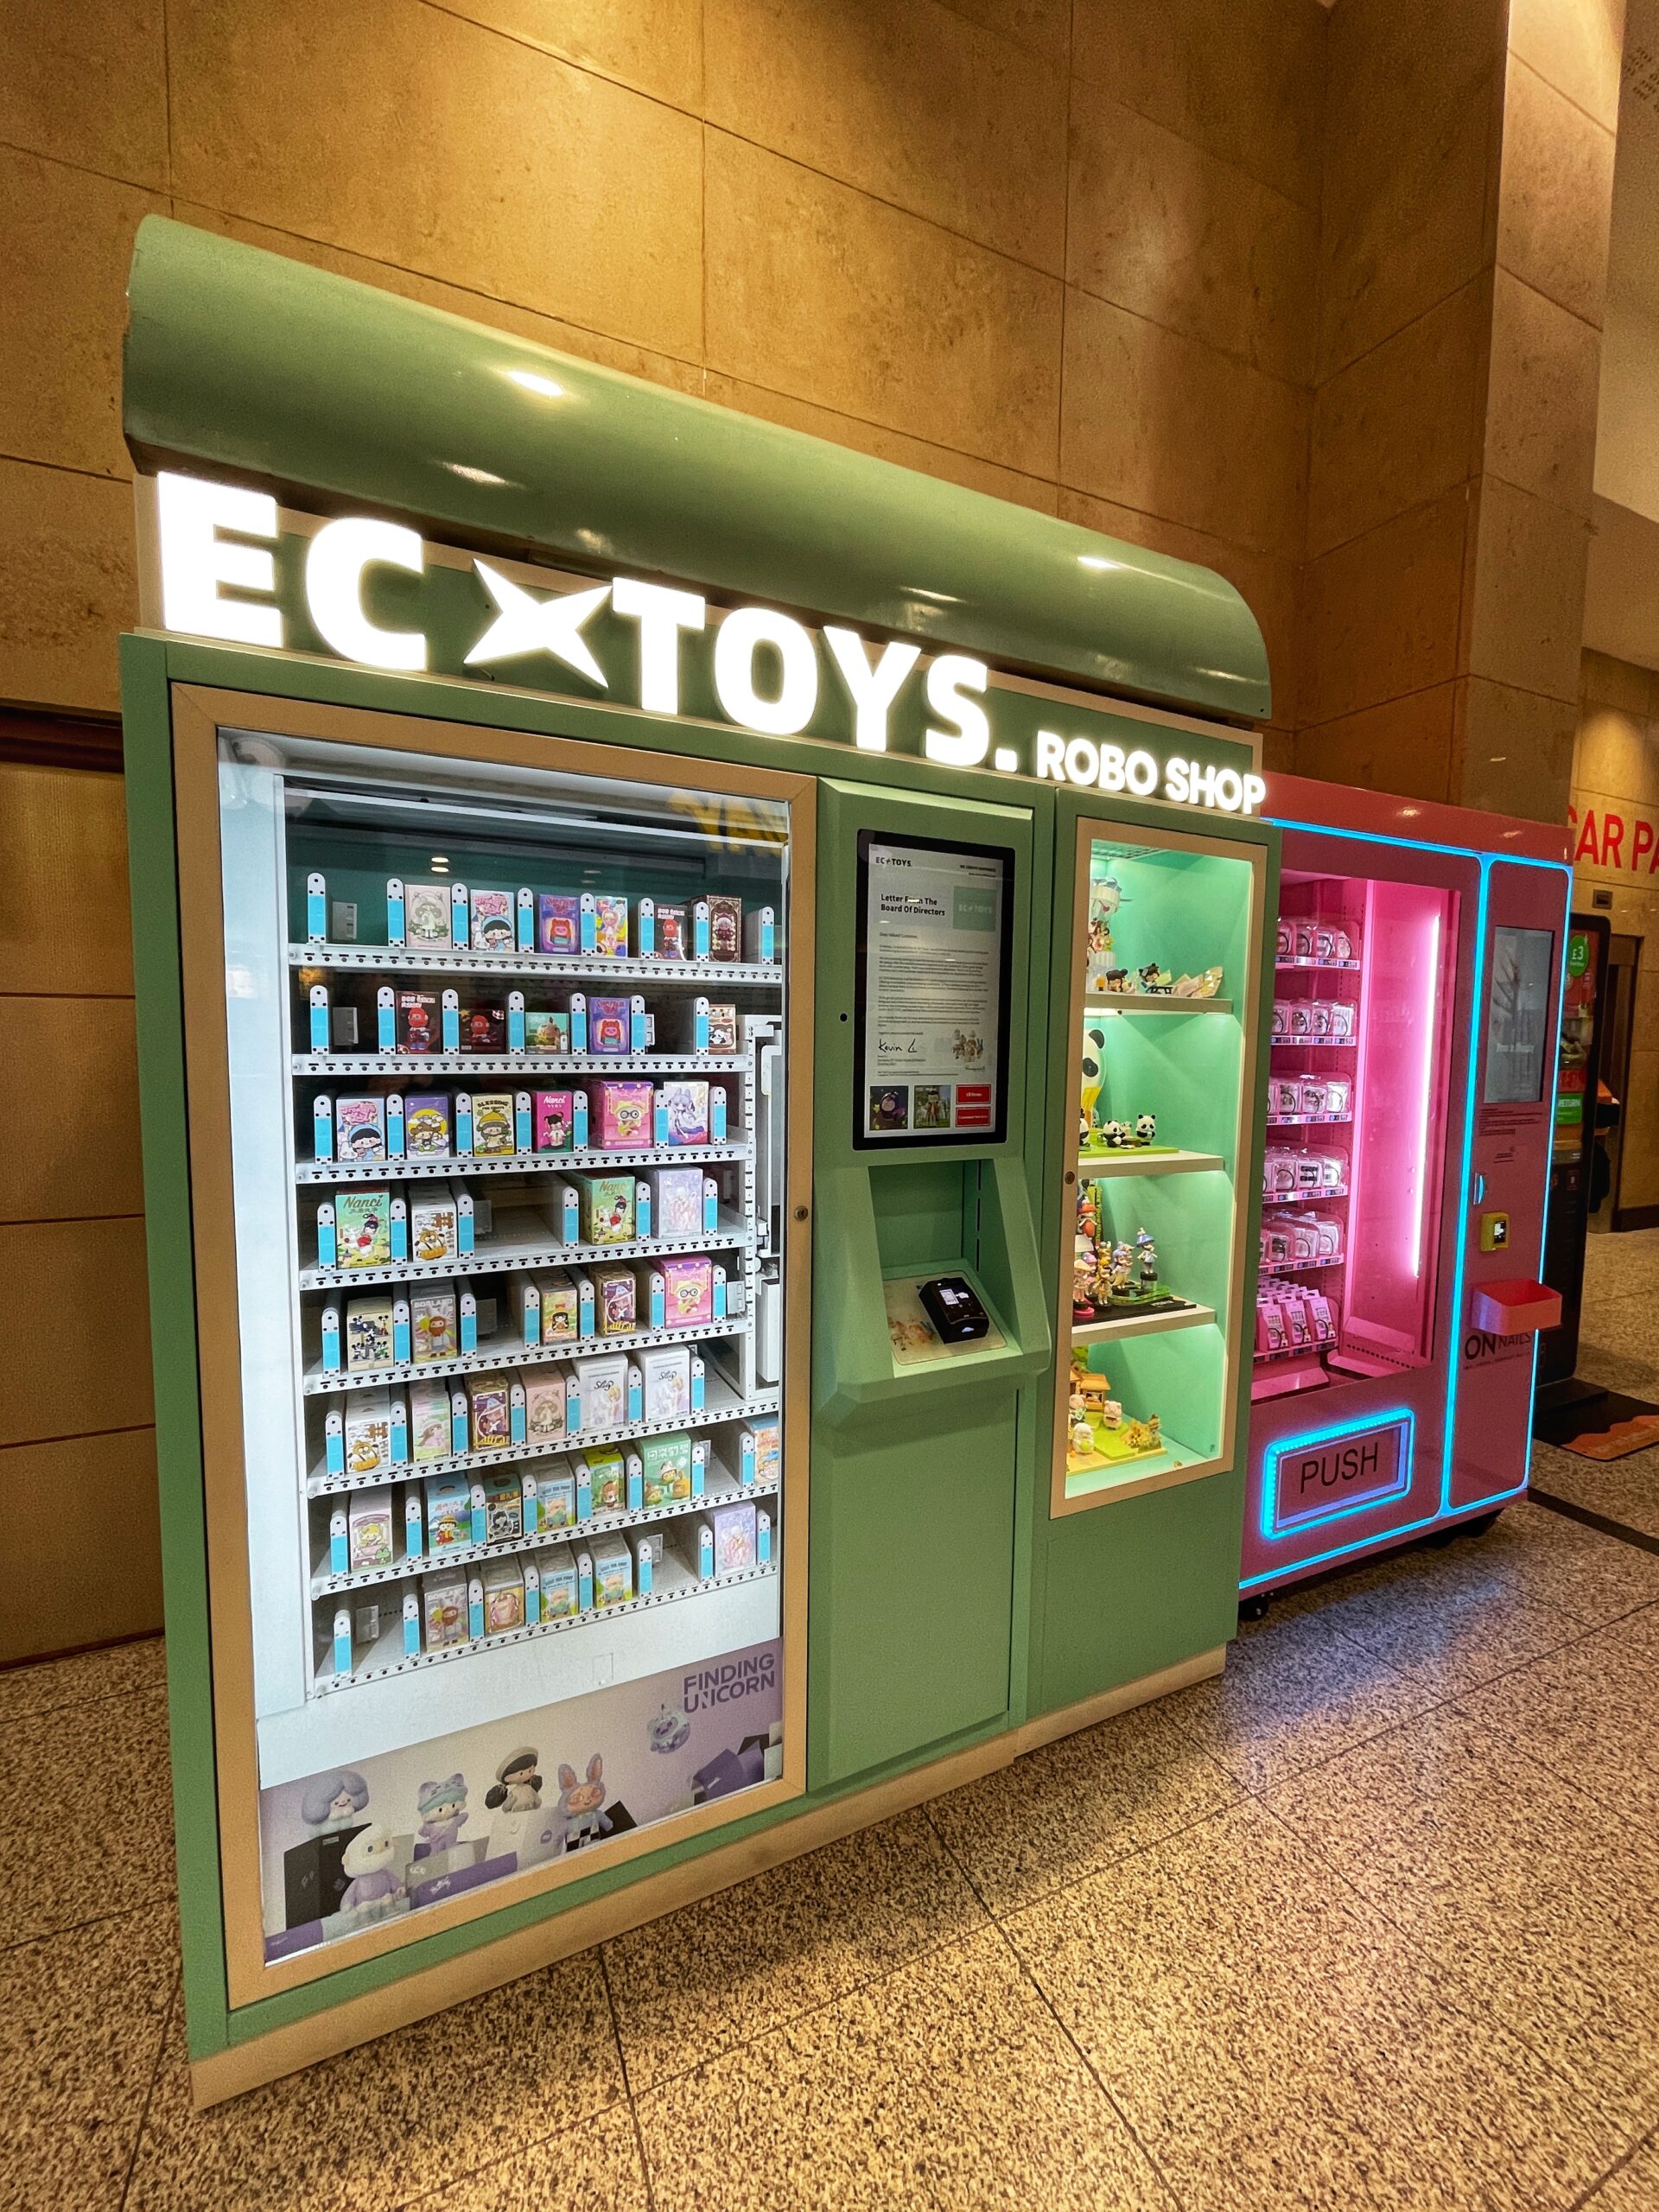 A toy vending machine